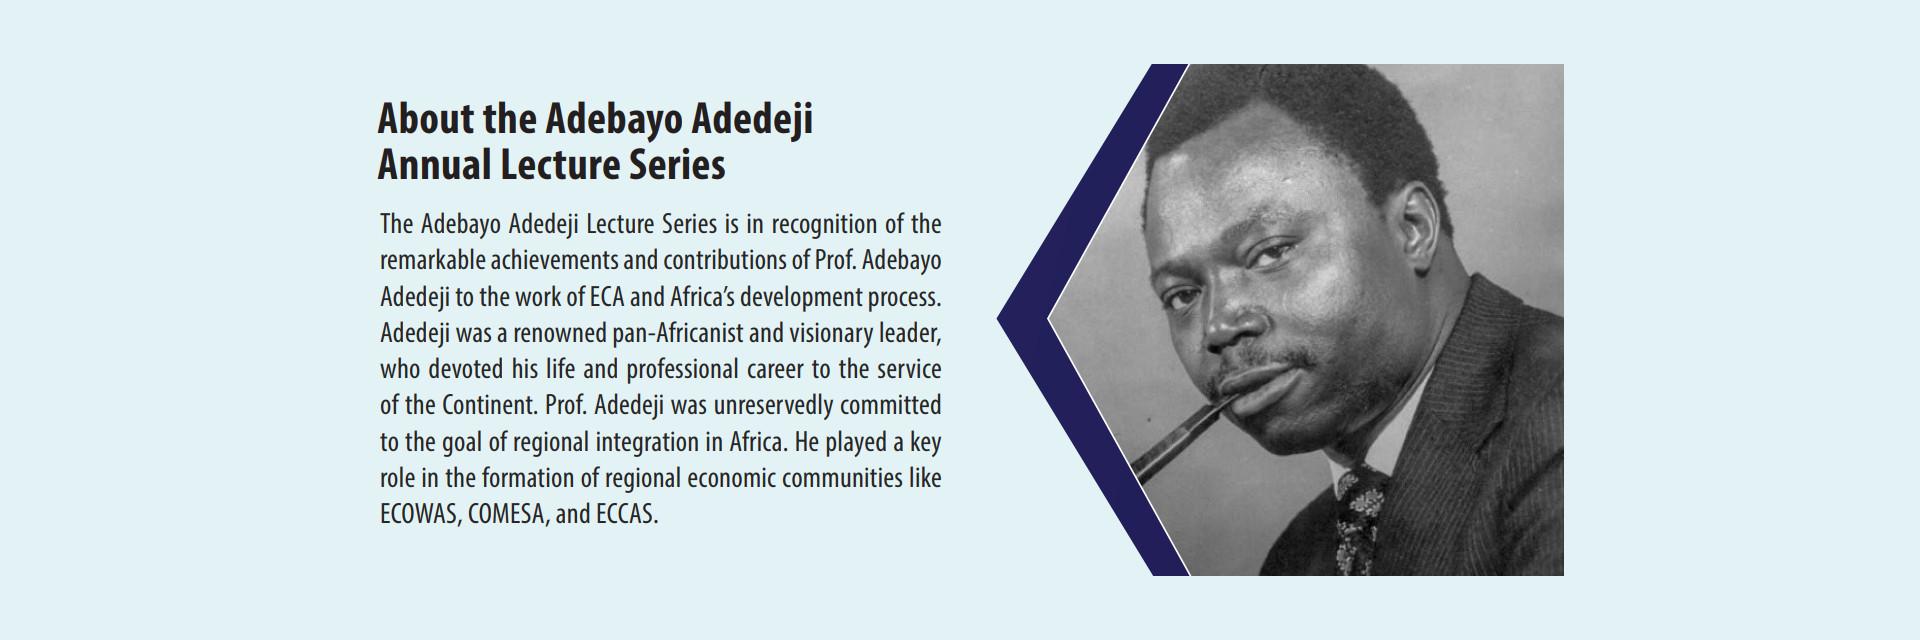 Adedeji remains a major figure in African regional integration